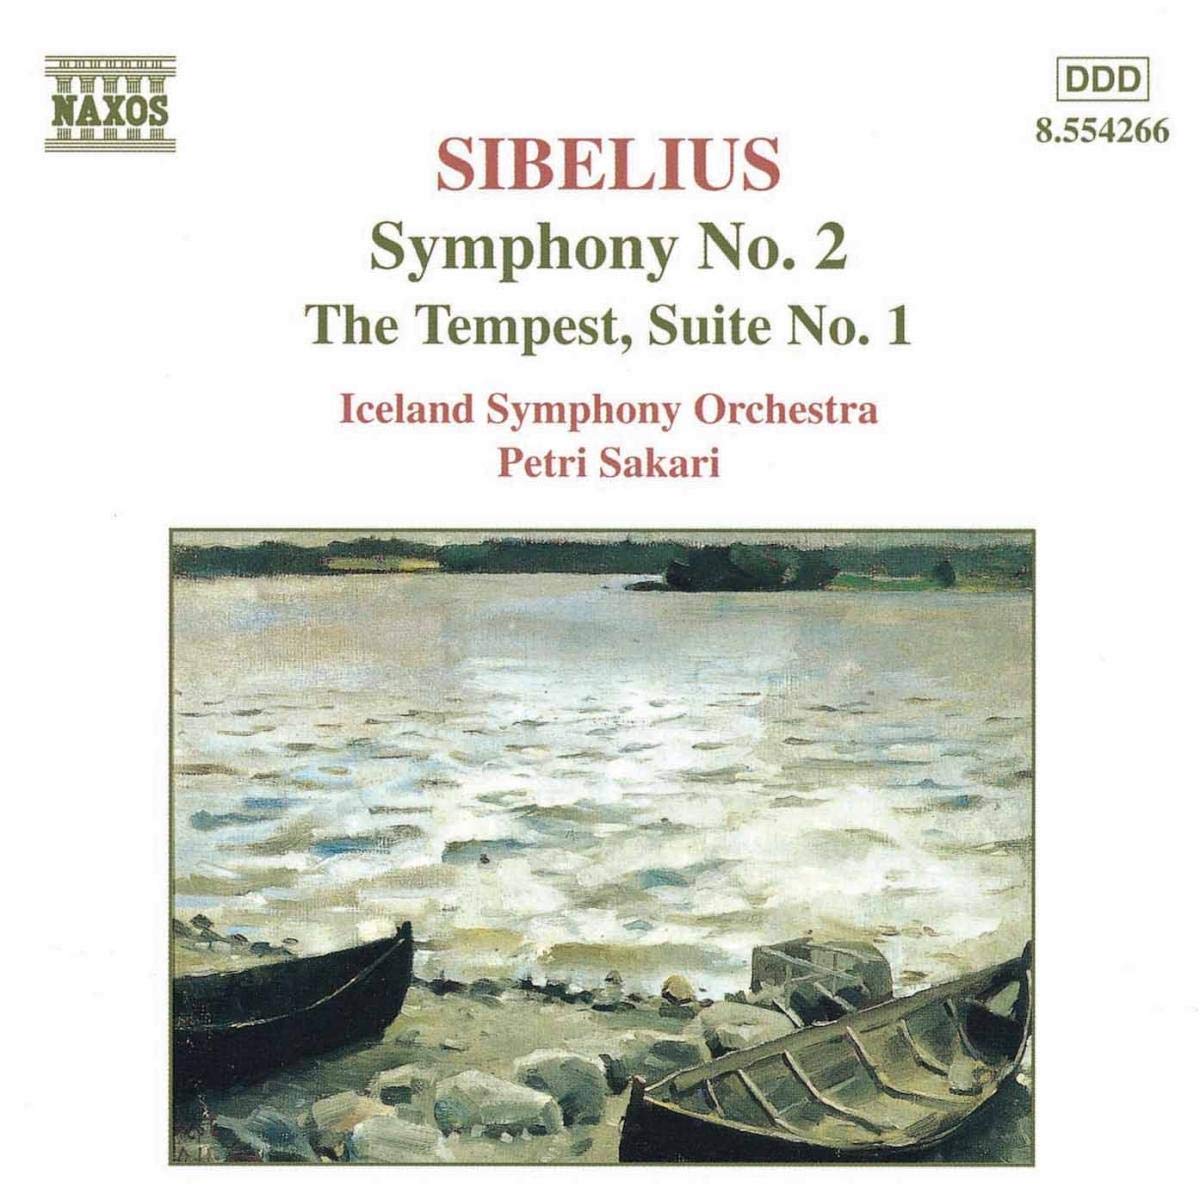 SIBELIUS: Symphony no. 2